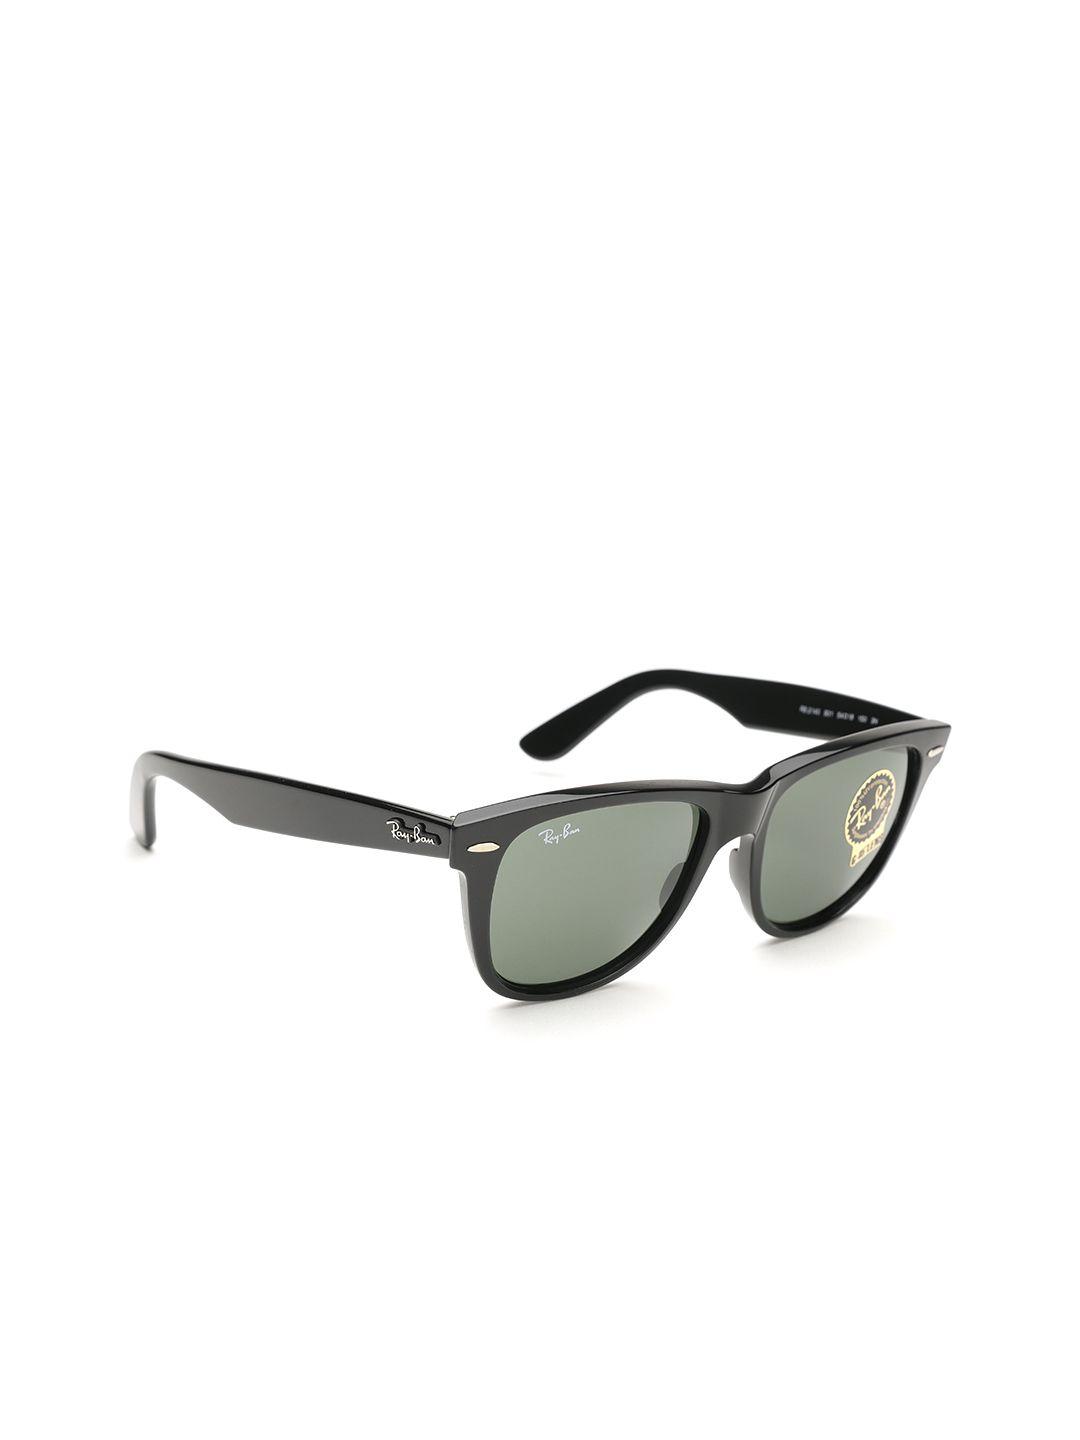 ray-ban unisex wayfarer sunglasses 0rb214090154